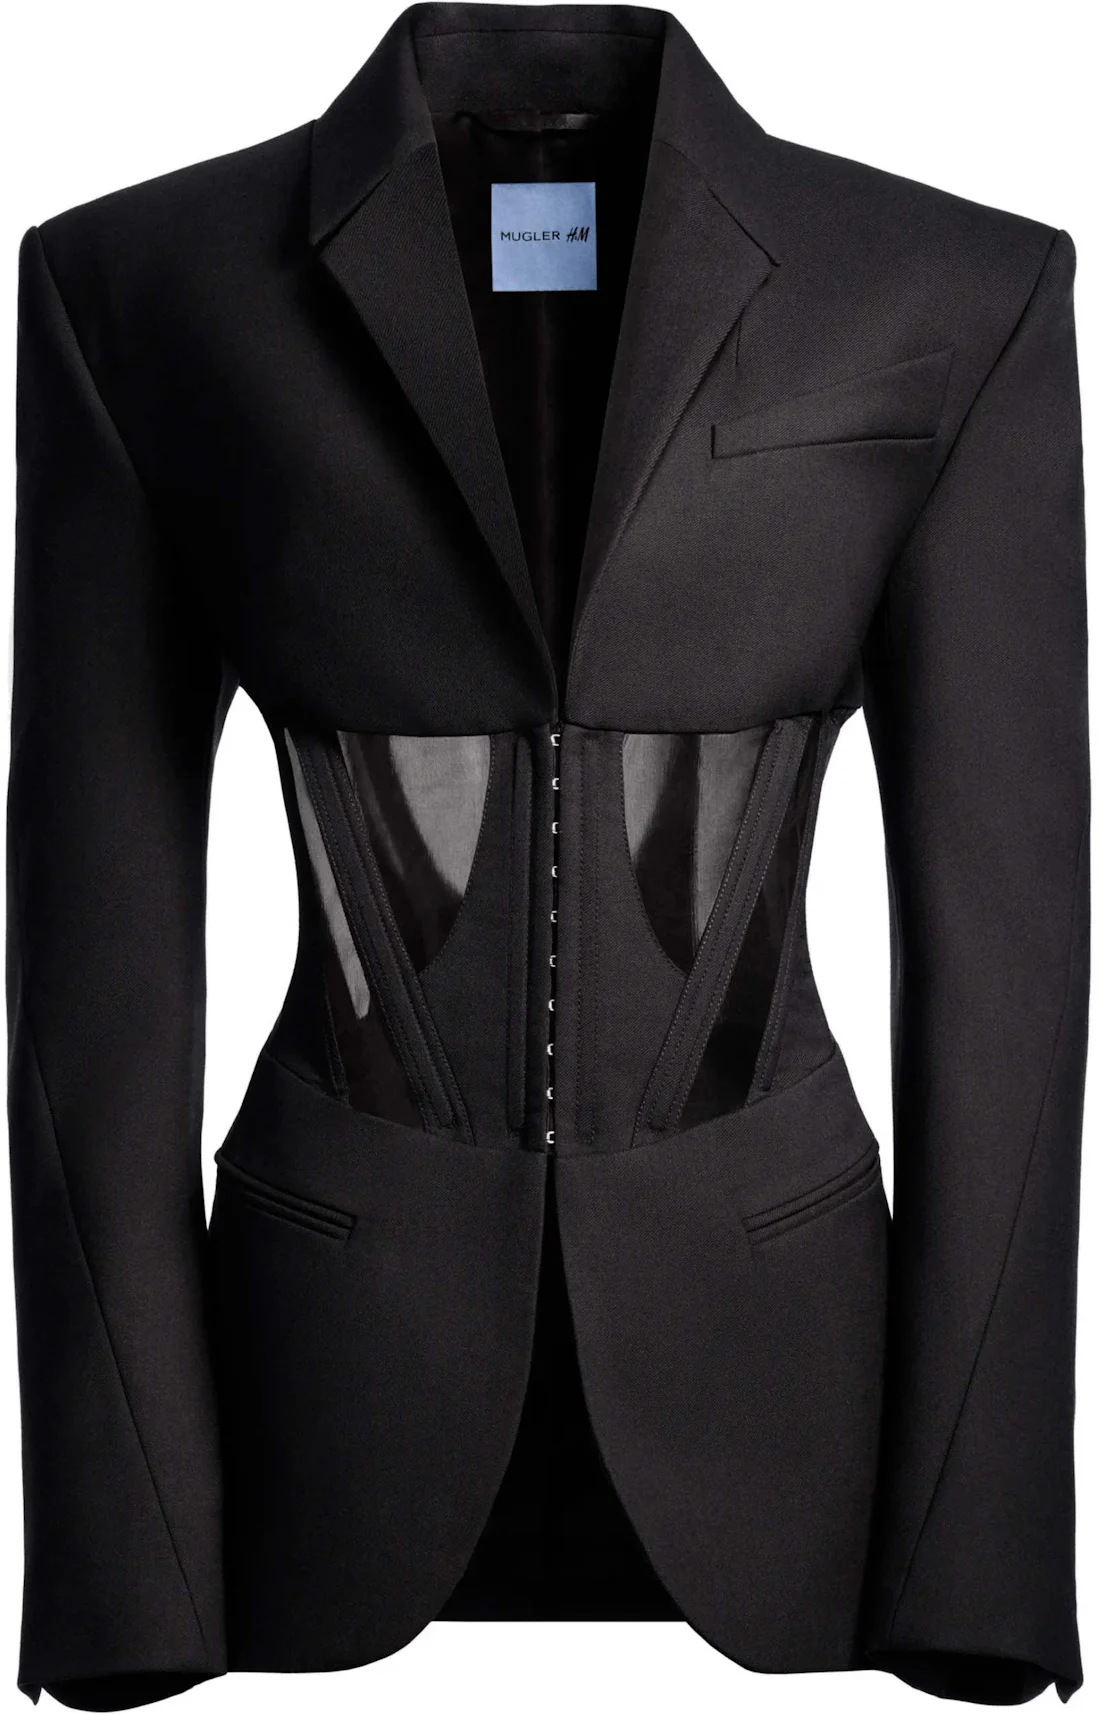 MARRKNULL Black Corset Suit Jacket